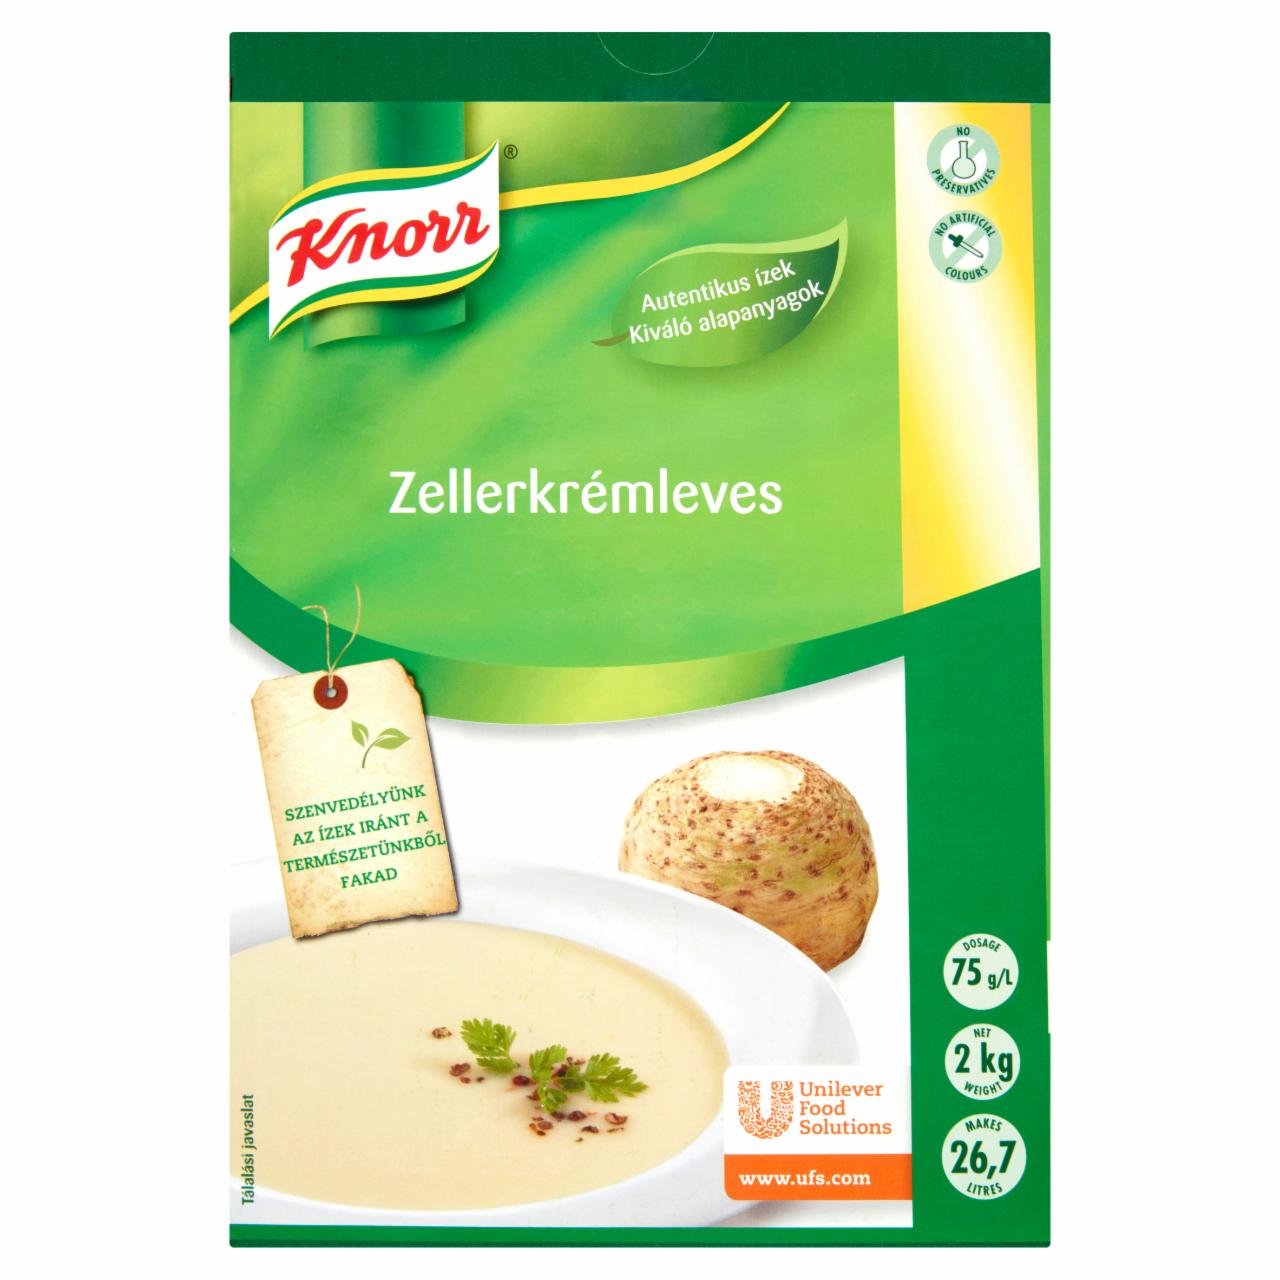 Képek - Knorr zellerkrémleves 2 kg